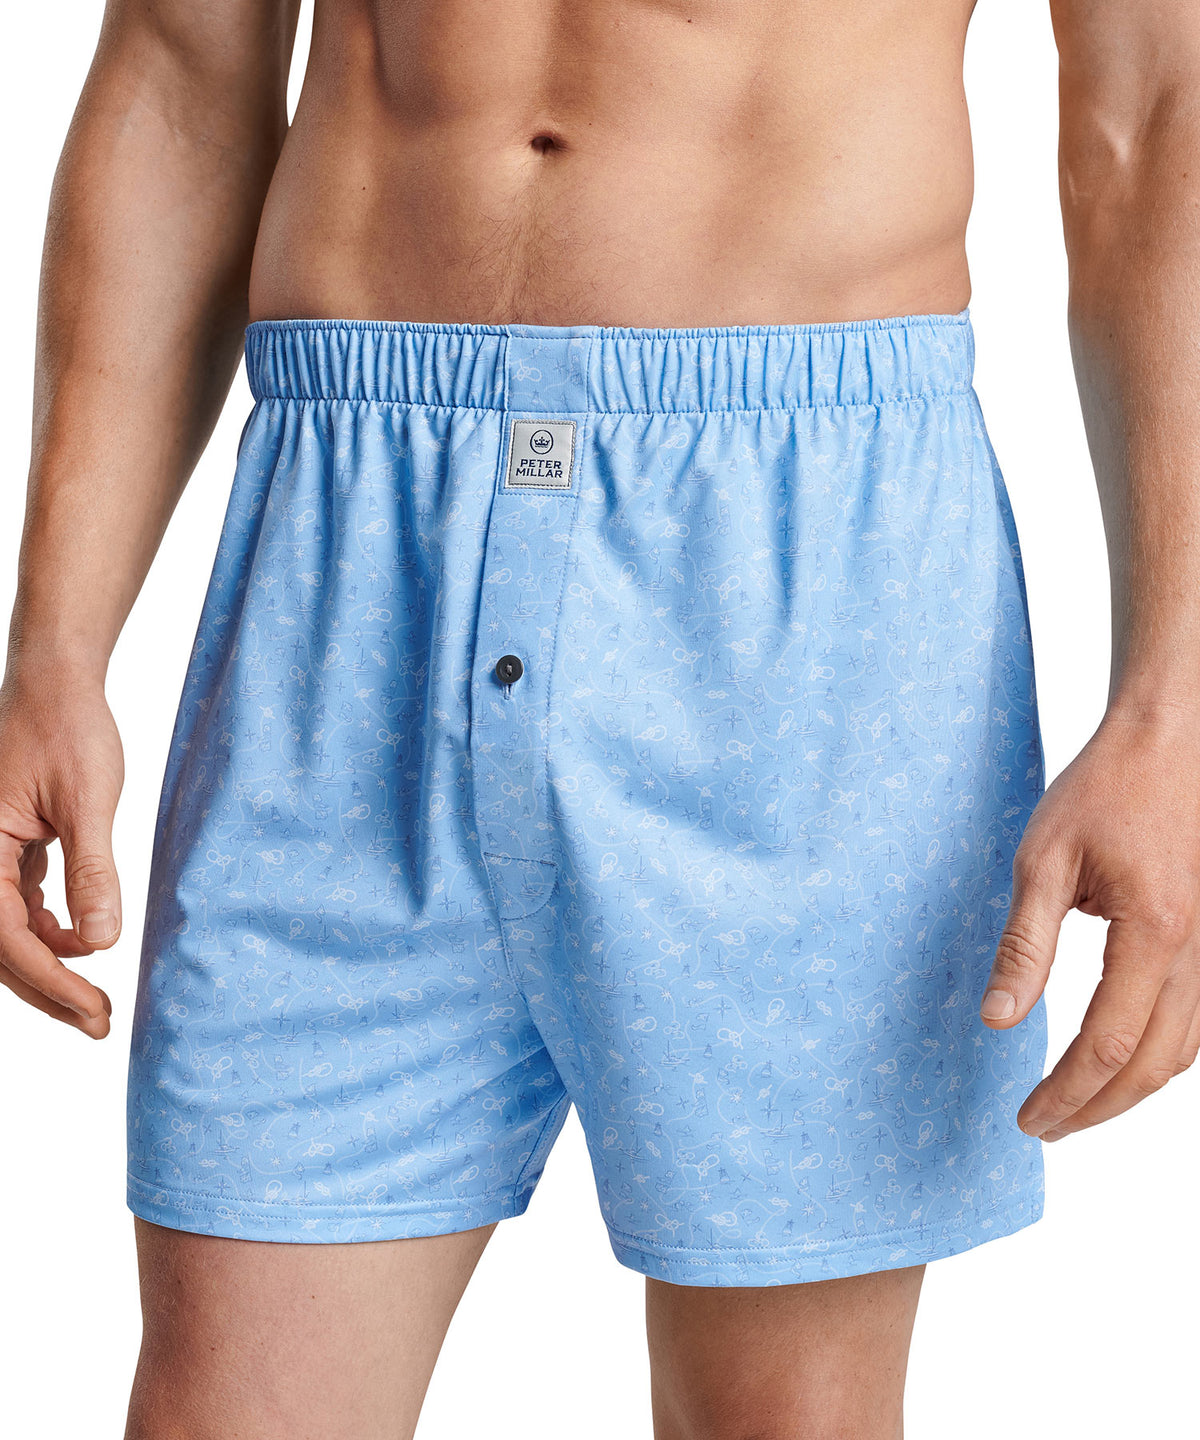 Peter Millar Nautical Print Boxer Short Underwear, Men's Big & Tall